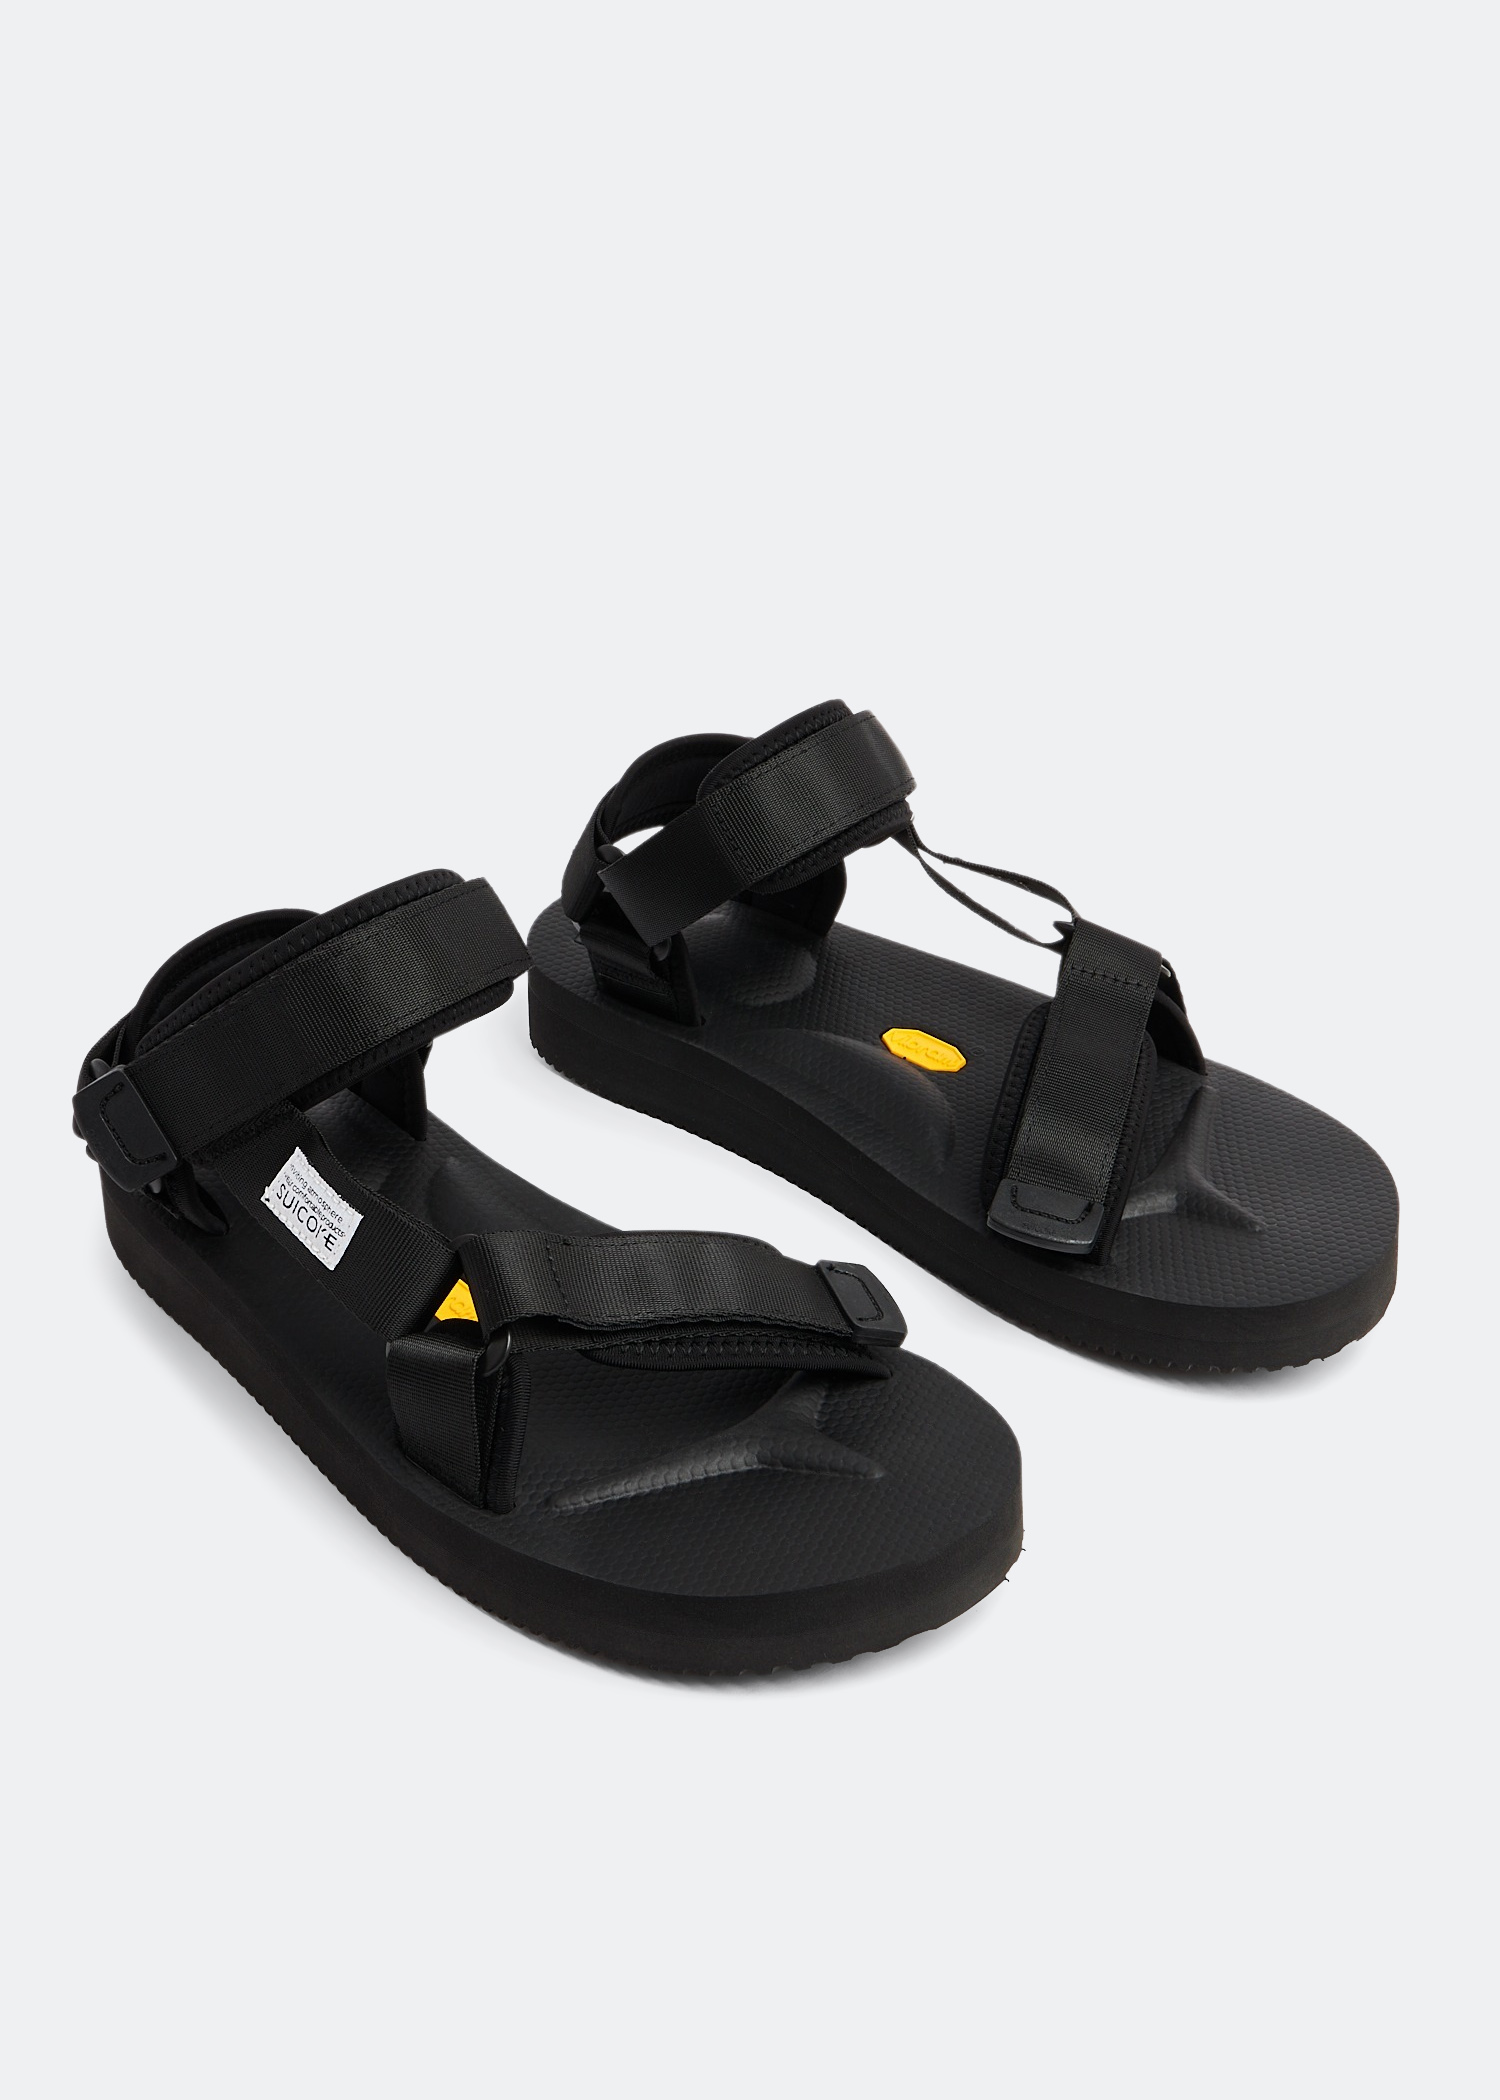 Suicoke Depa-V2 sandals for Women - Black in UAE | Level Shoes